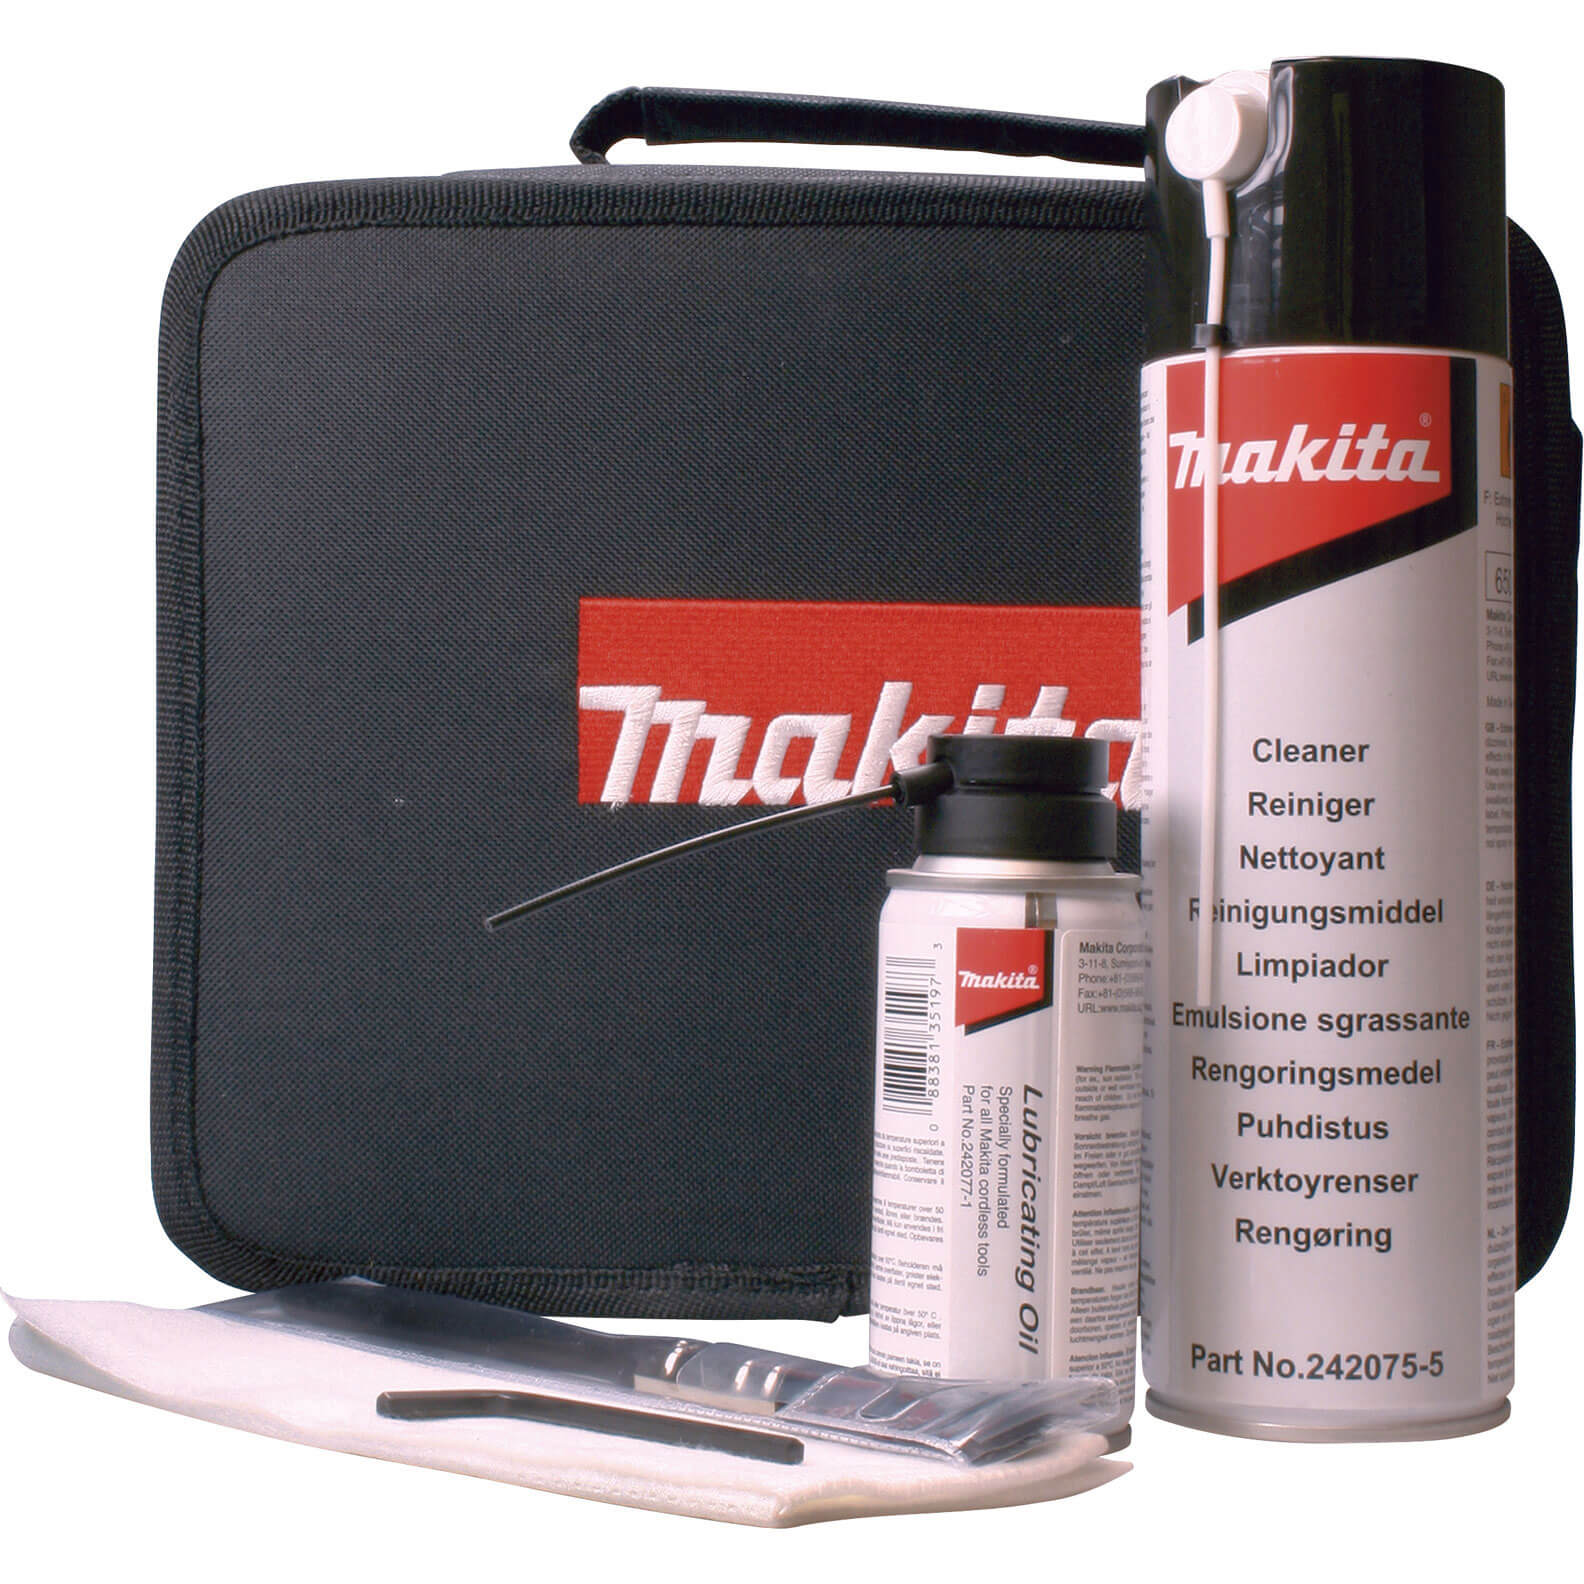 Image of Makita Cleaning Kit for GN900SE Nail Gun